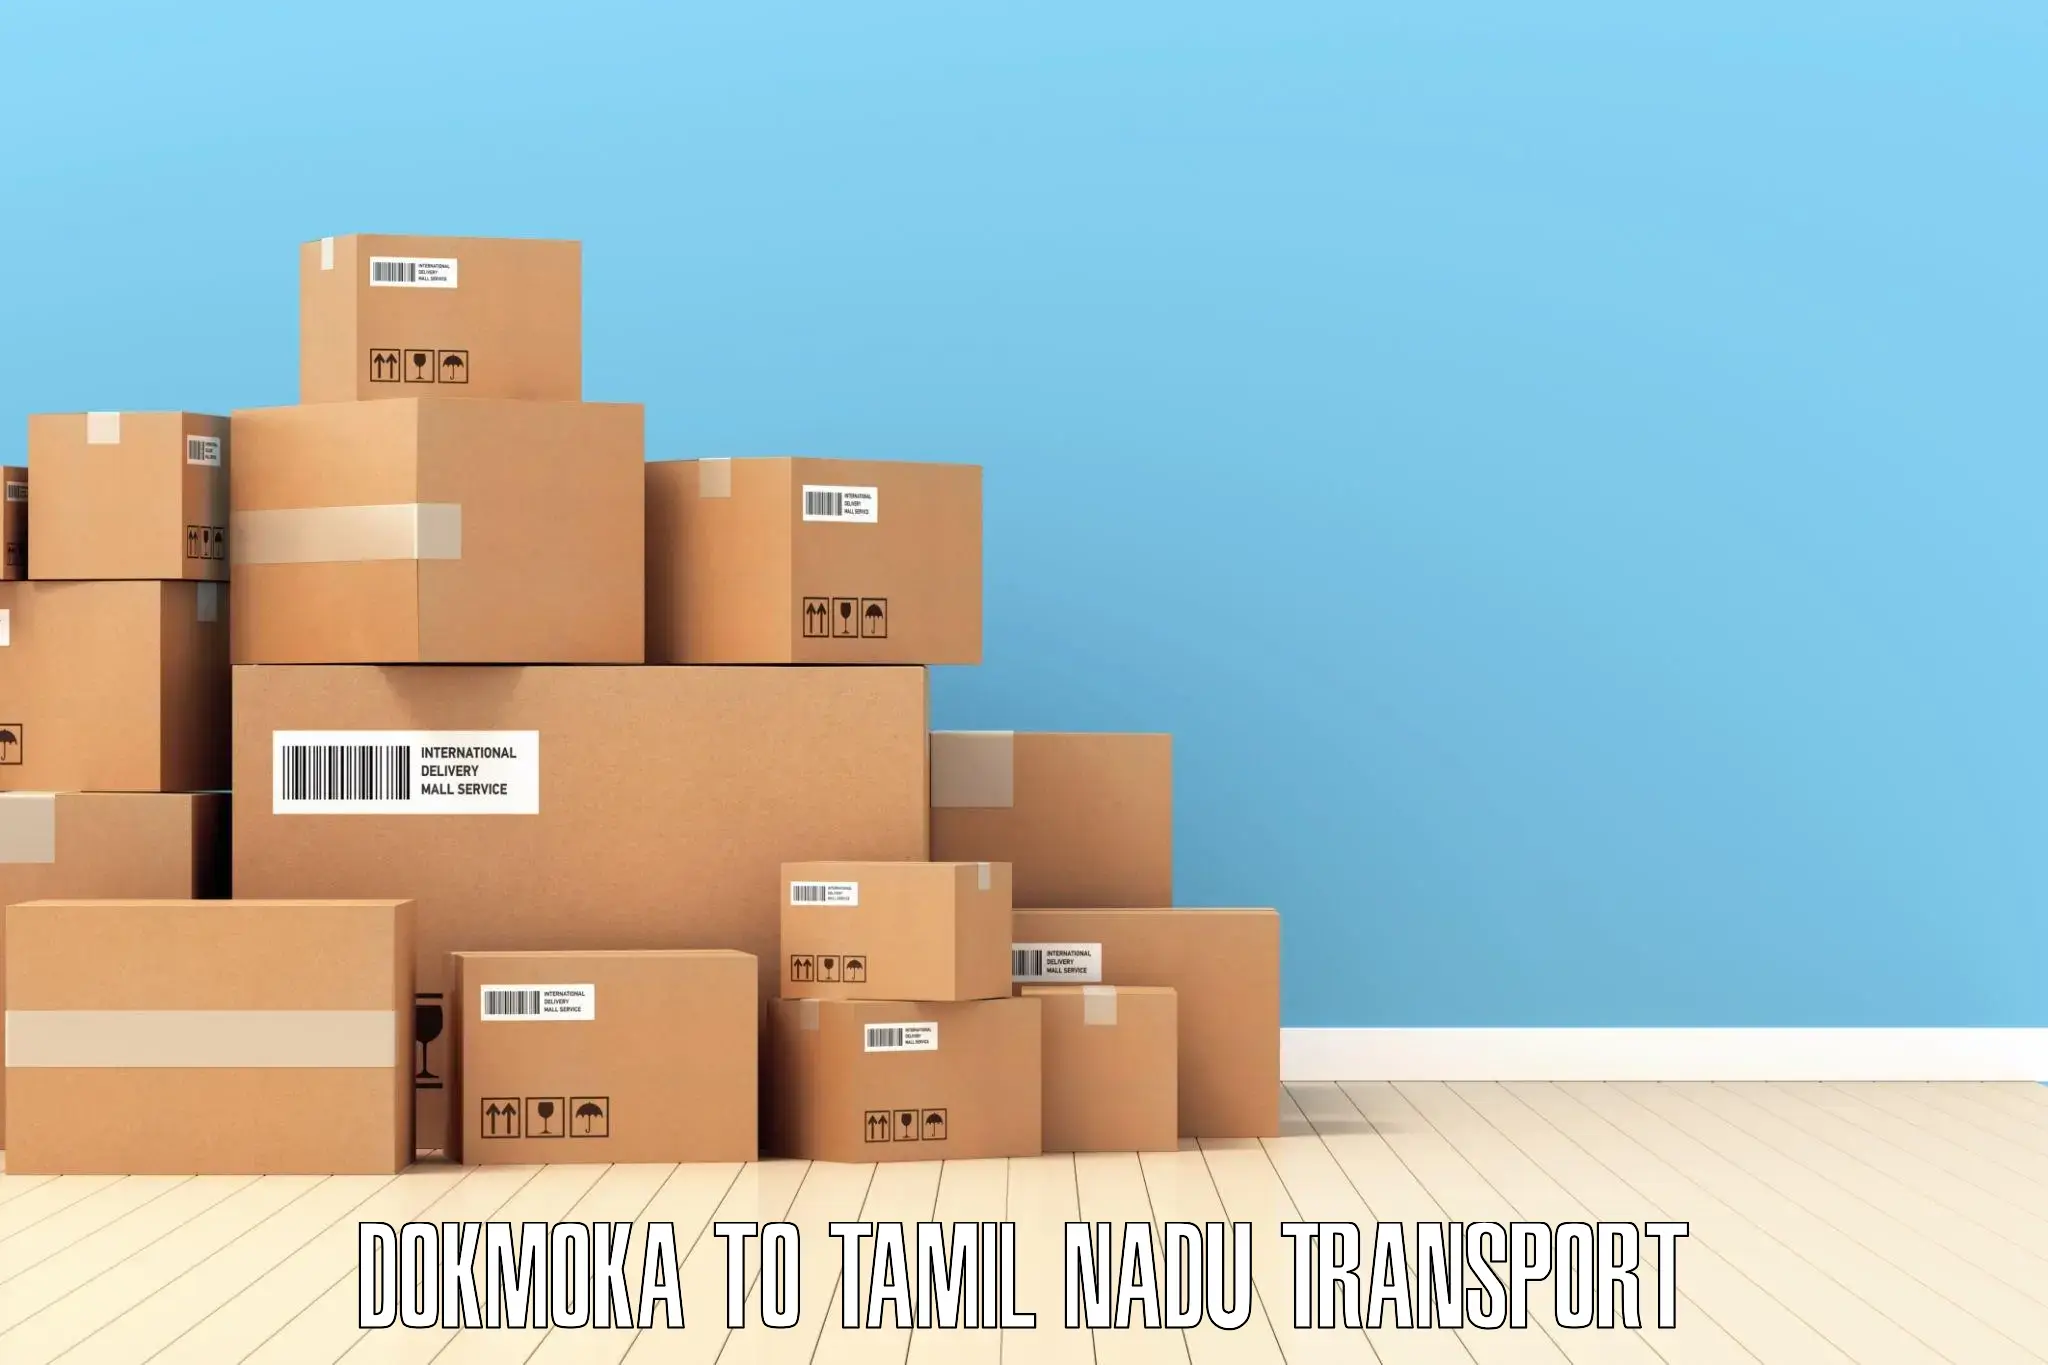 Container transport service Dokmoka to Anthiyur